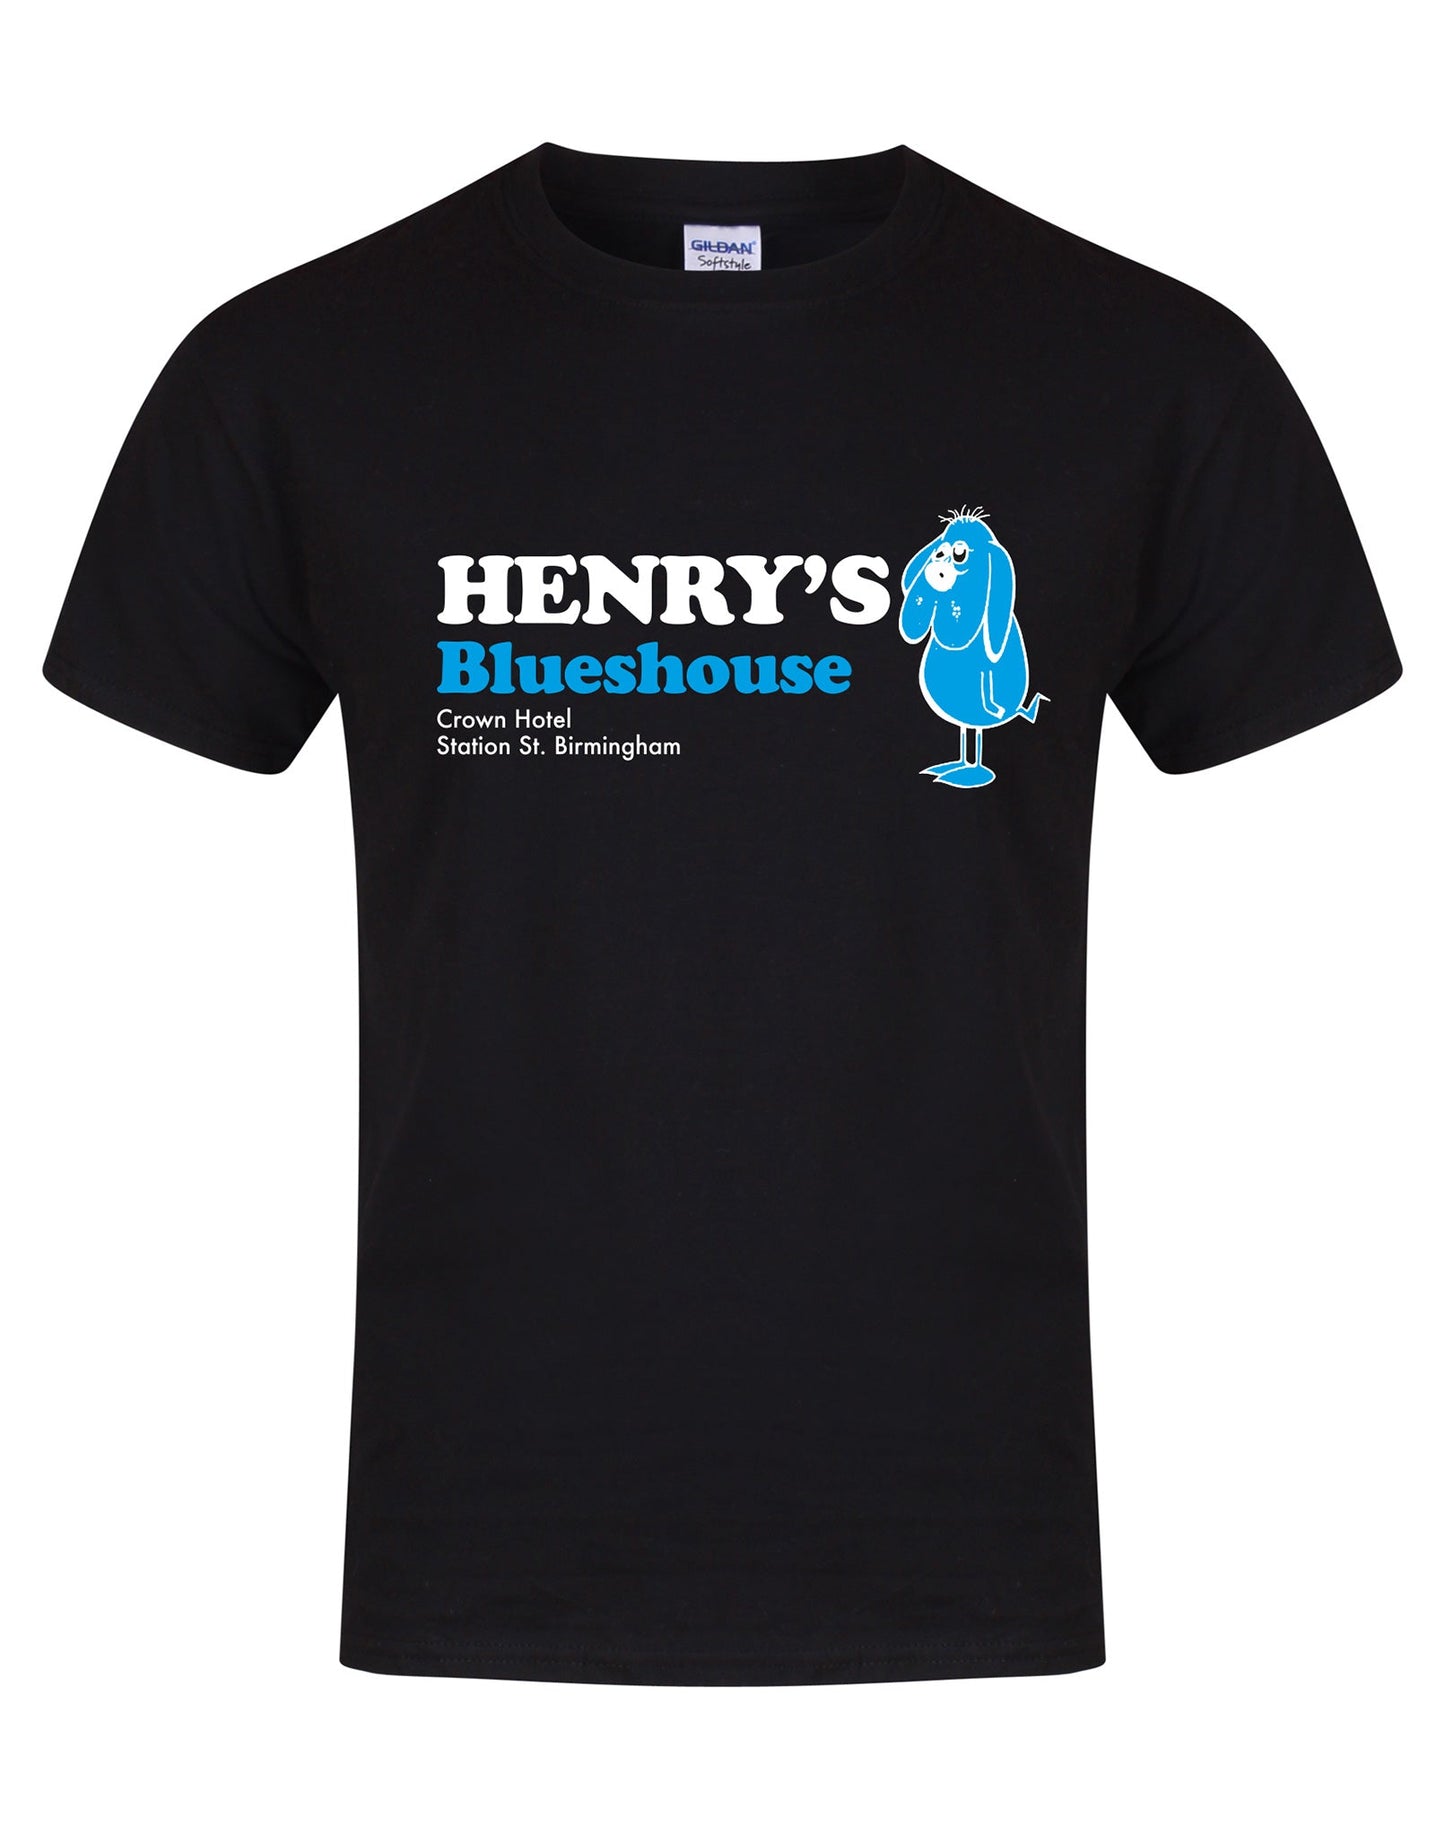 Henry's Blueshouse unisex fit T-shirt - various colours - Dirty Stop Outs